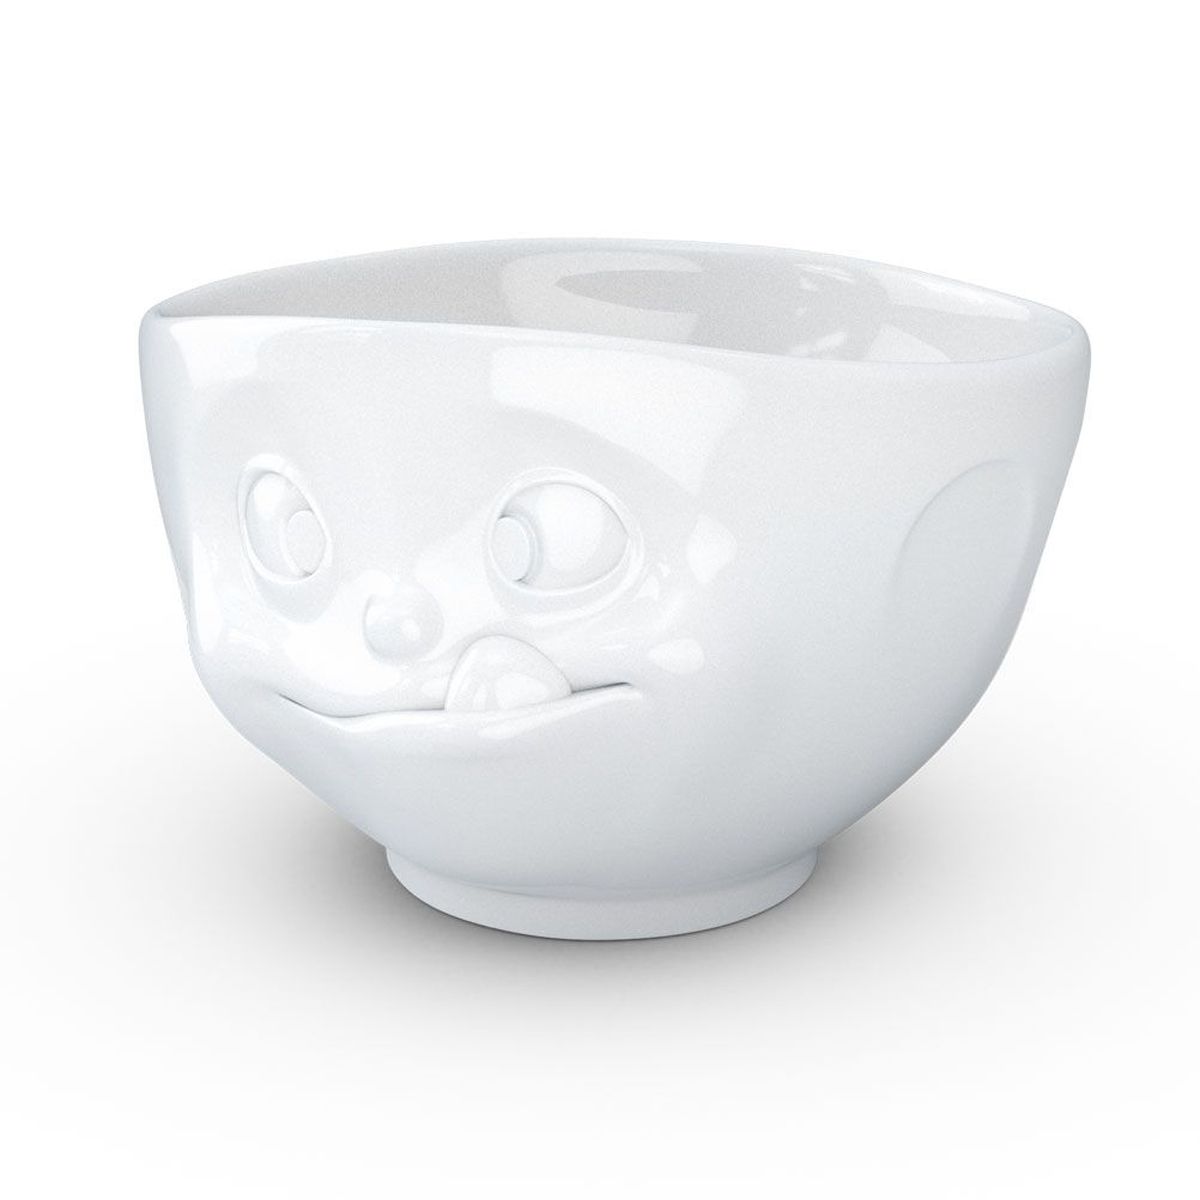 XL Mood Porcelain Bowl by Tassen 1000 ml - Gourmet